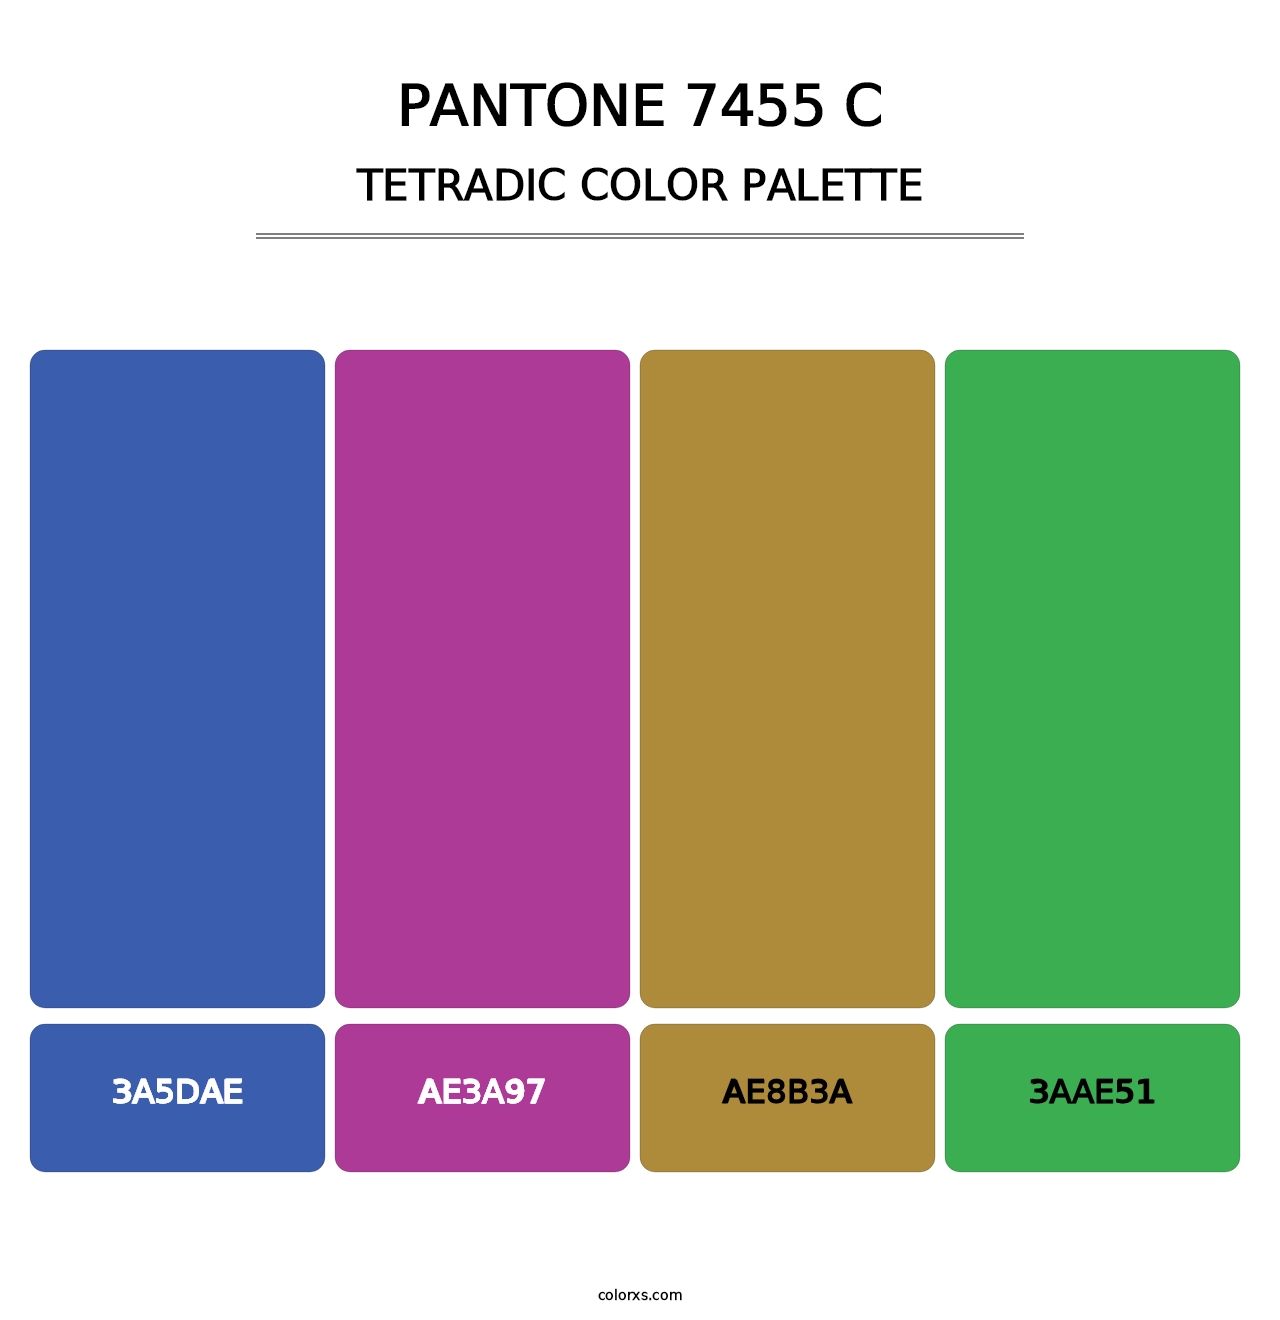 PANTONE 7455 C - Tetradic Color Palette